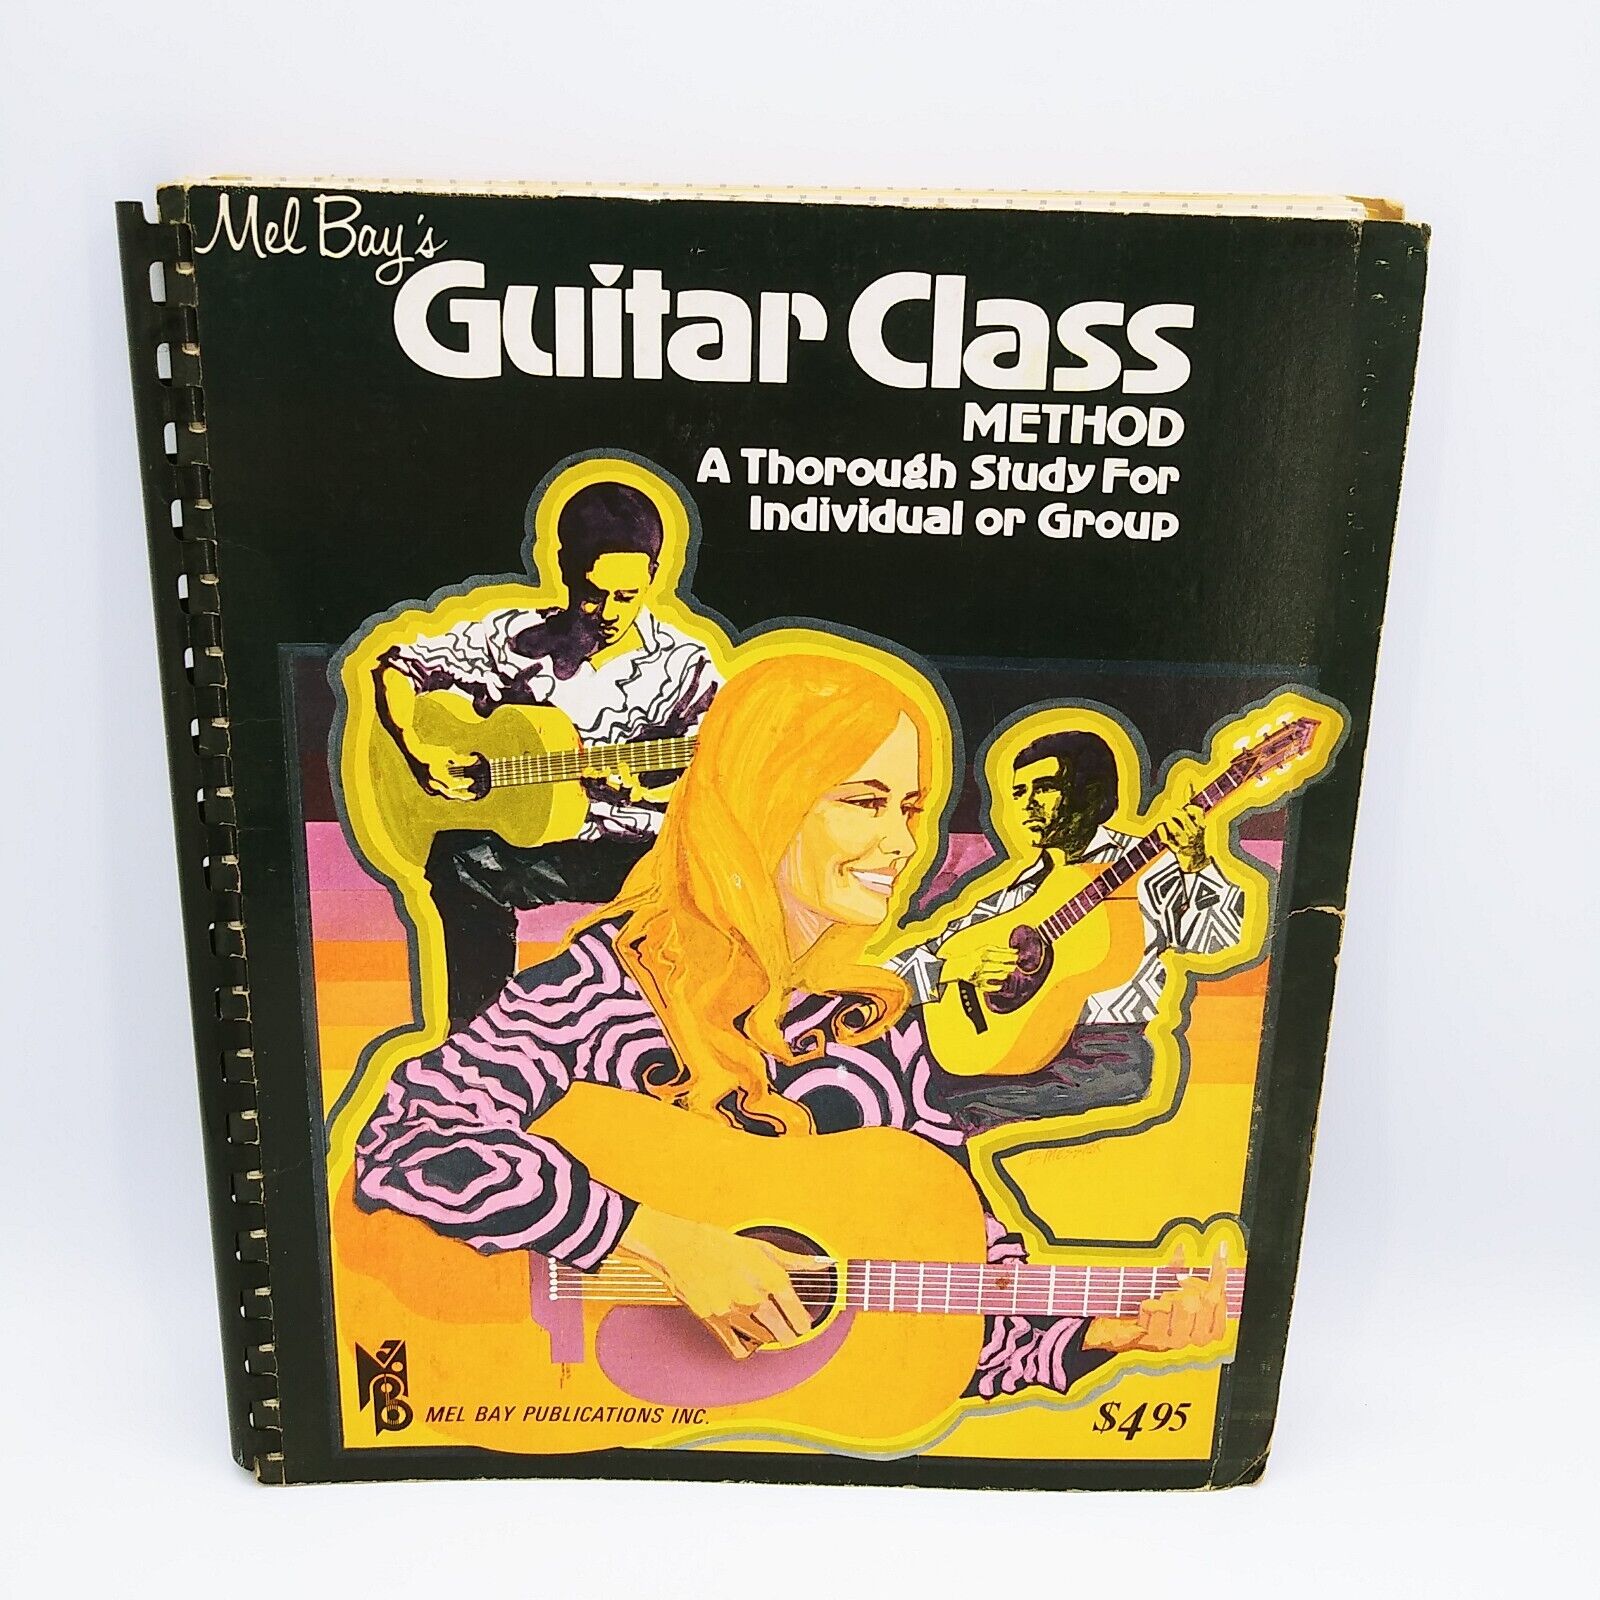 Mel Bays Guitar Class Method Publication Song Book Instruction 1972 - READ